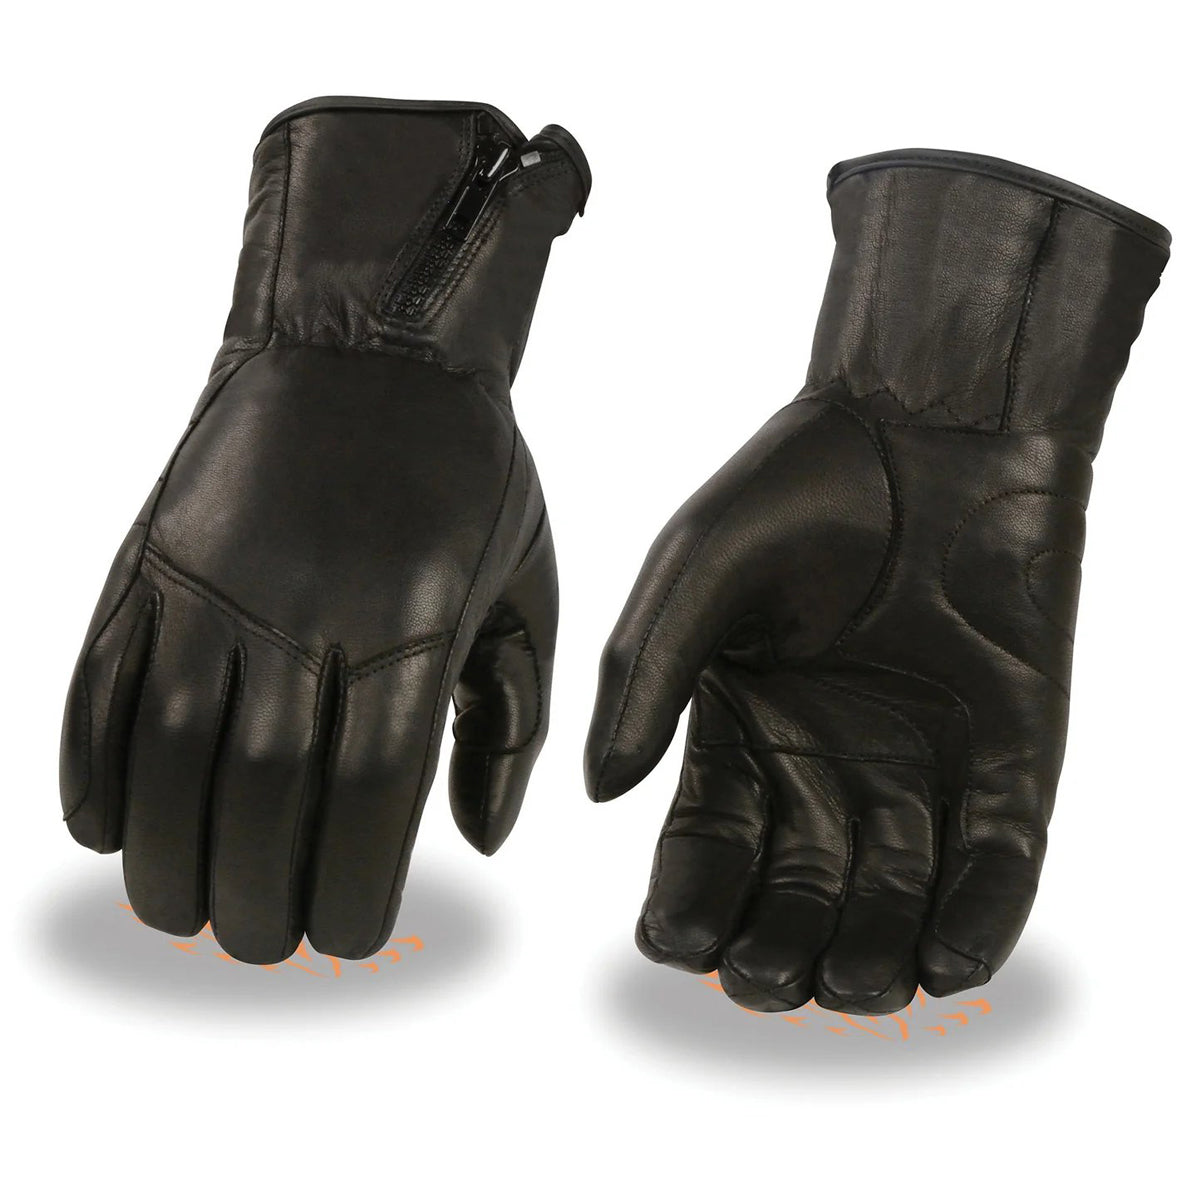 Men's Black Premium Leather Long Wrist Gloves with Zipper Top